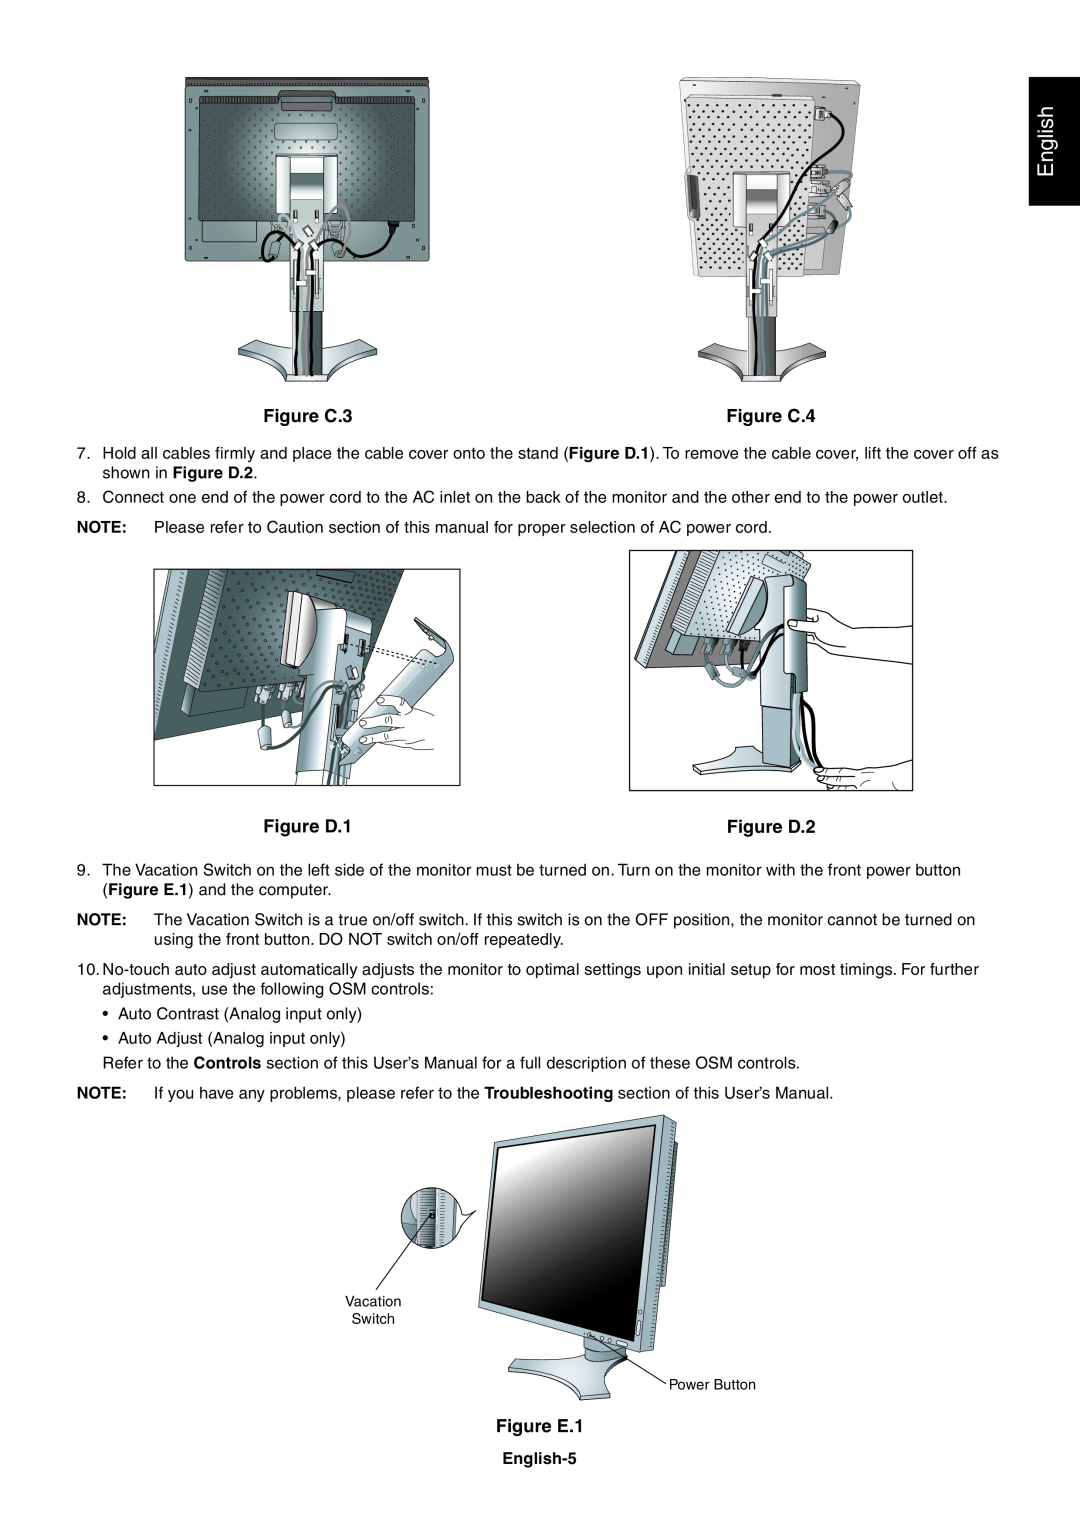 NEC LCD2090UXI user manual English, Figure C.3, Figure C.4, Figure D.1, Figure D.2, Figure E.1 